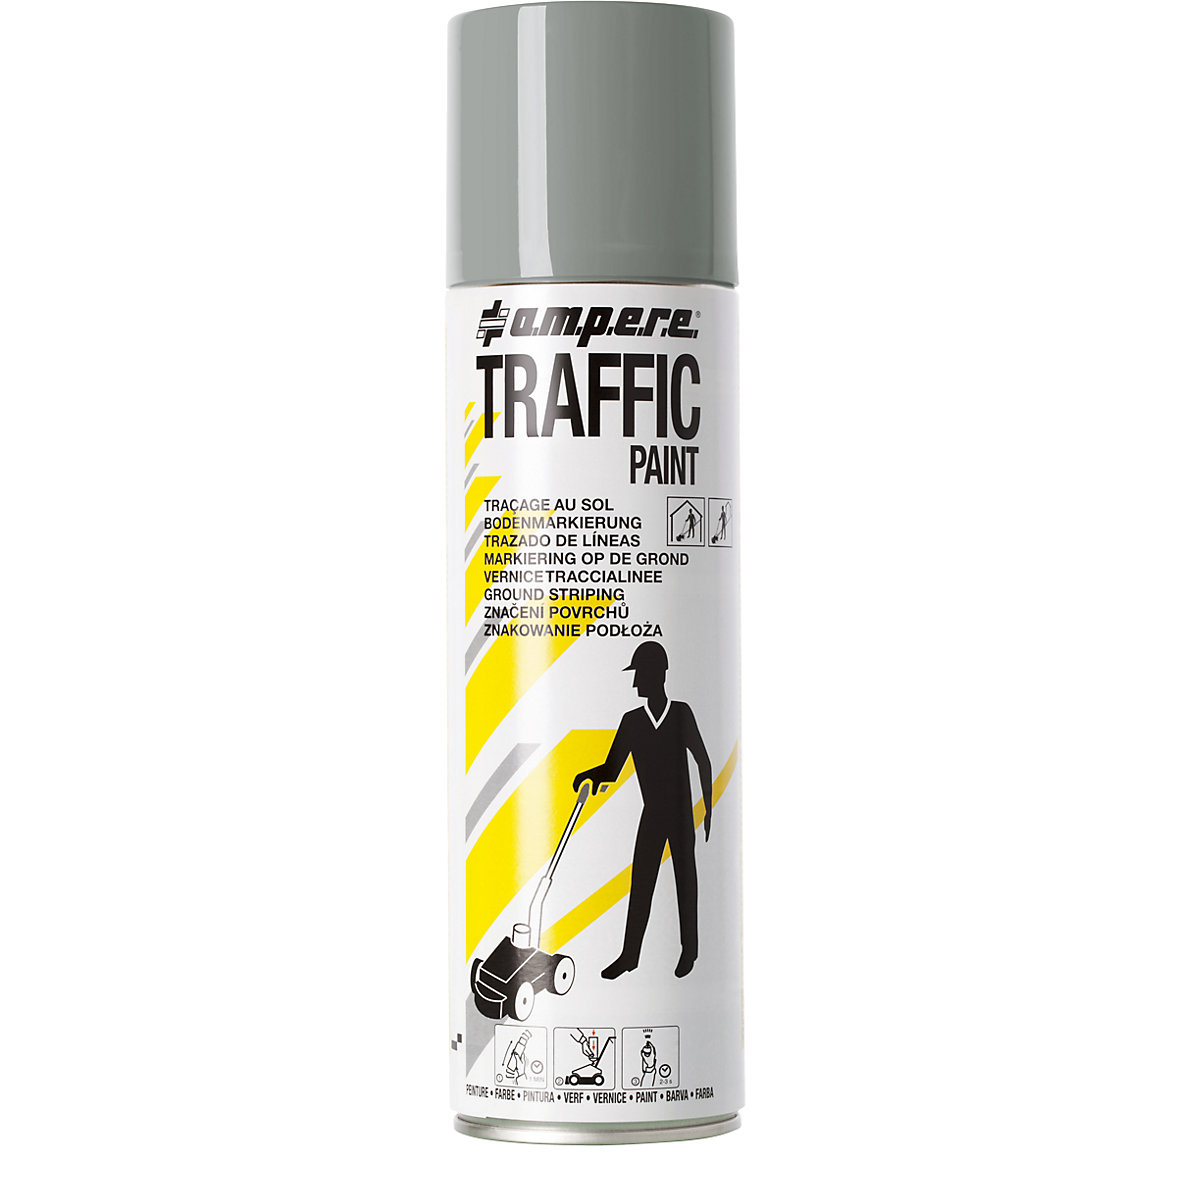 Tinta de marcação Traffic Paint® – Ampere, volume 500 ml, embalagem 12 latas, cinzento-7